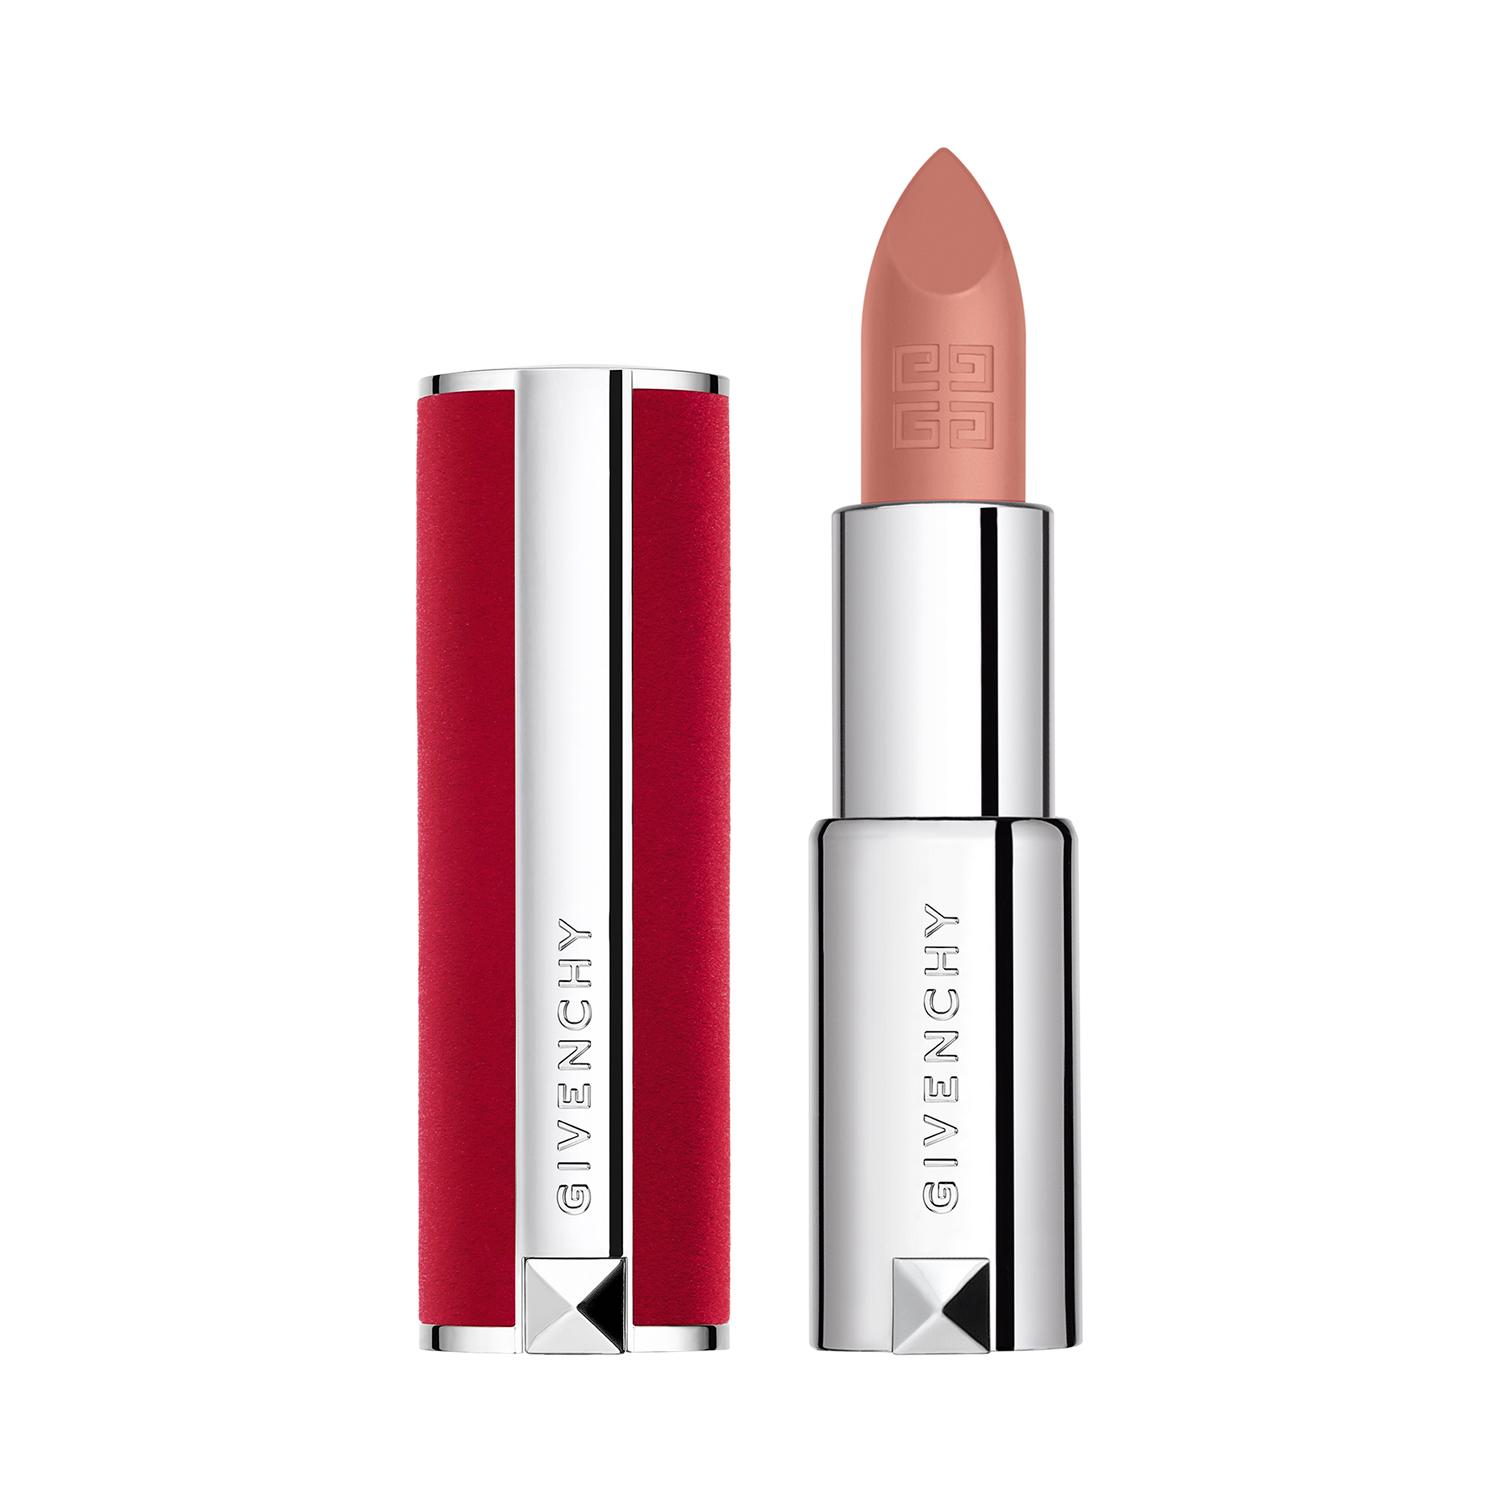 Givenchy | Givenchy Le Rouge Deep Velvet 23 Ext Matte Lipstick - N09 Peach (3.4 g)